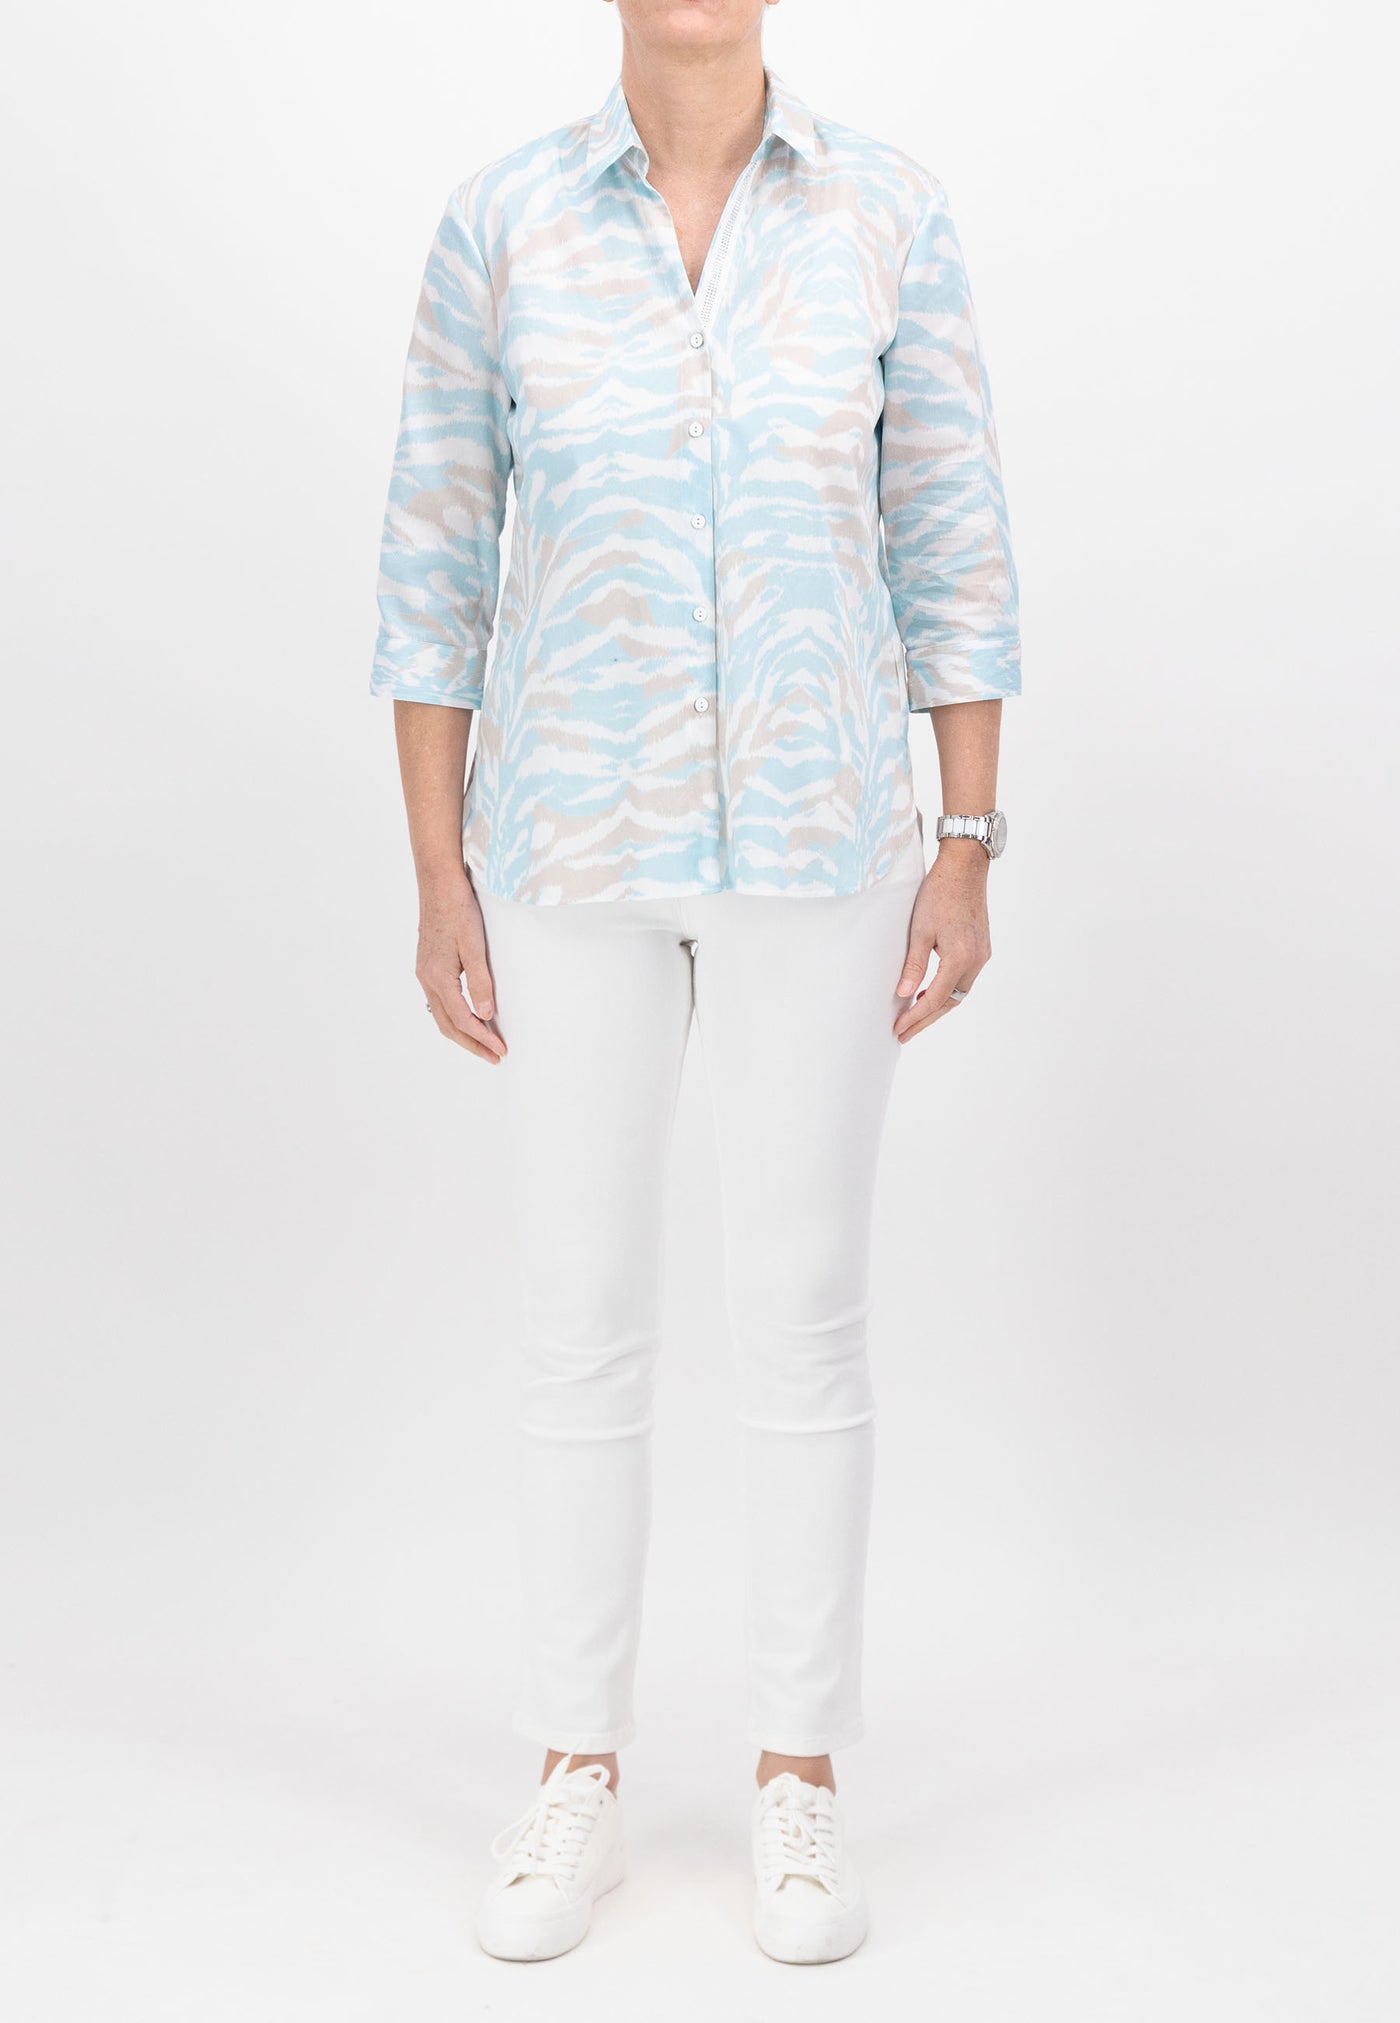 Blue/White/Beige Button Shirt With Diamond Trim